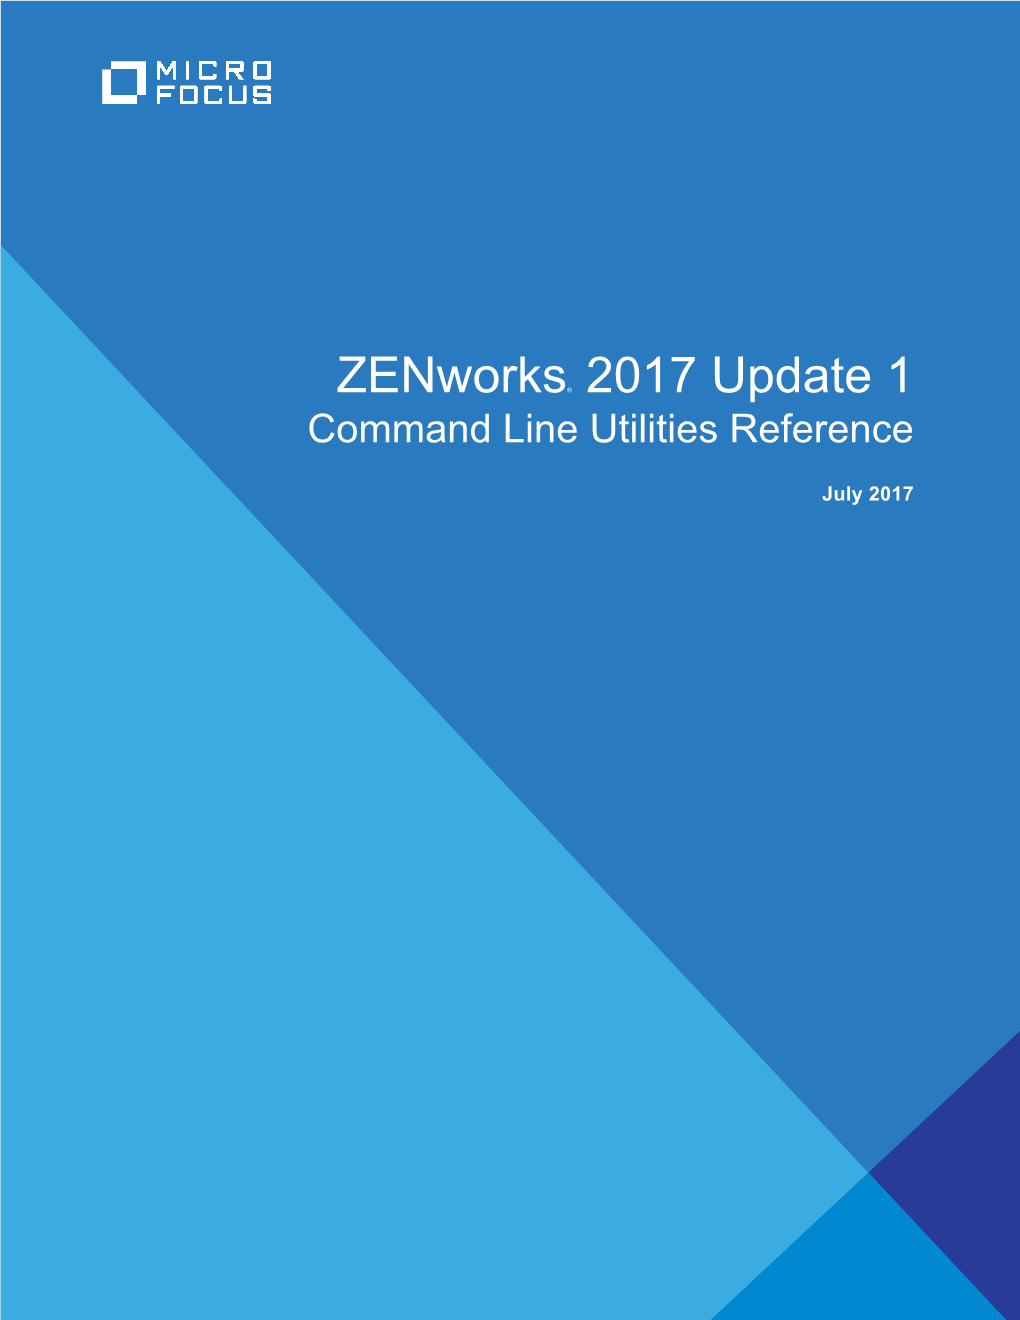 Zenworks Command Line Utilities Reference Includes Information to Help You Use Micro Focus Zenworks Utilities Such As Zman, Zac, and Zeninfocollect